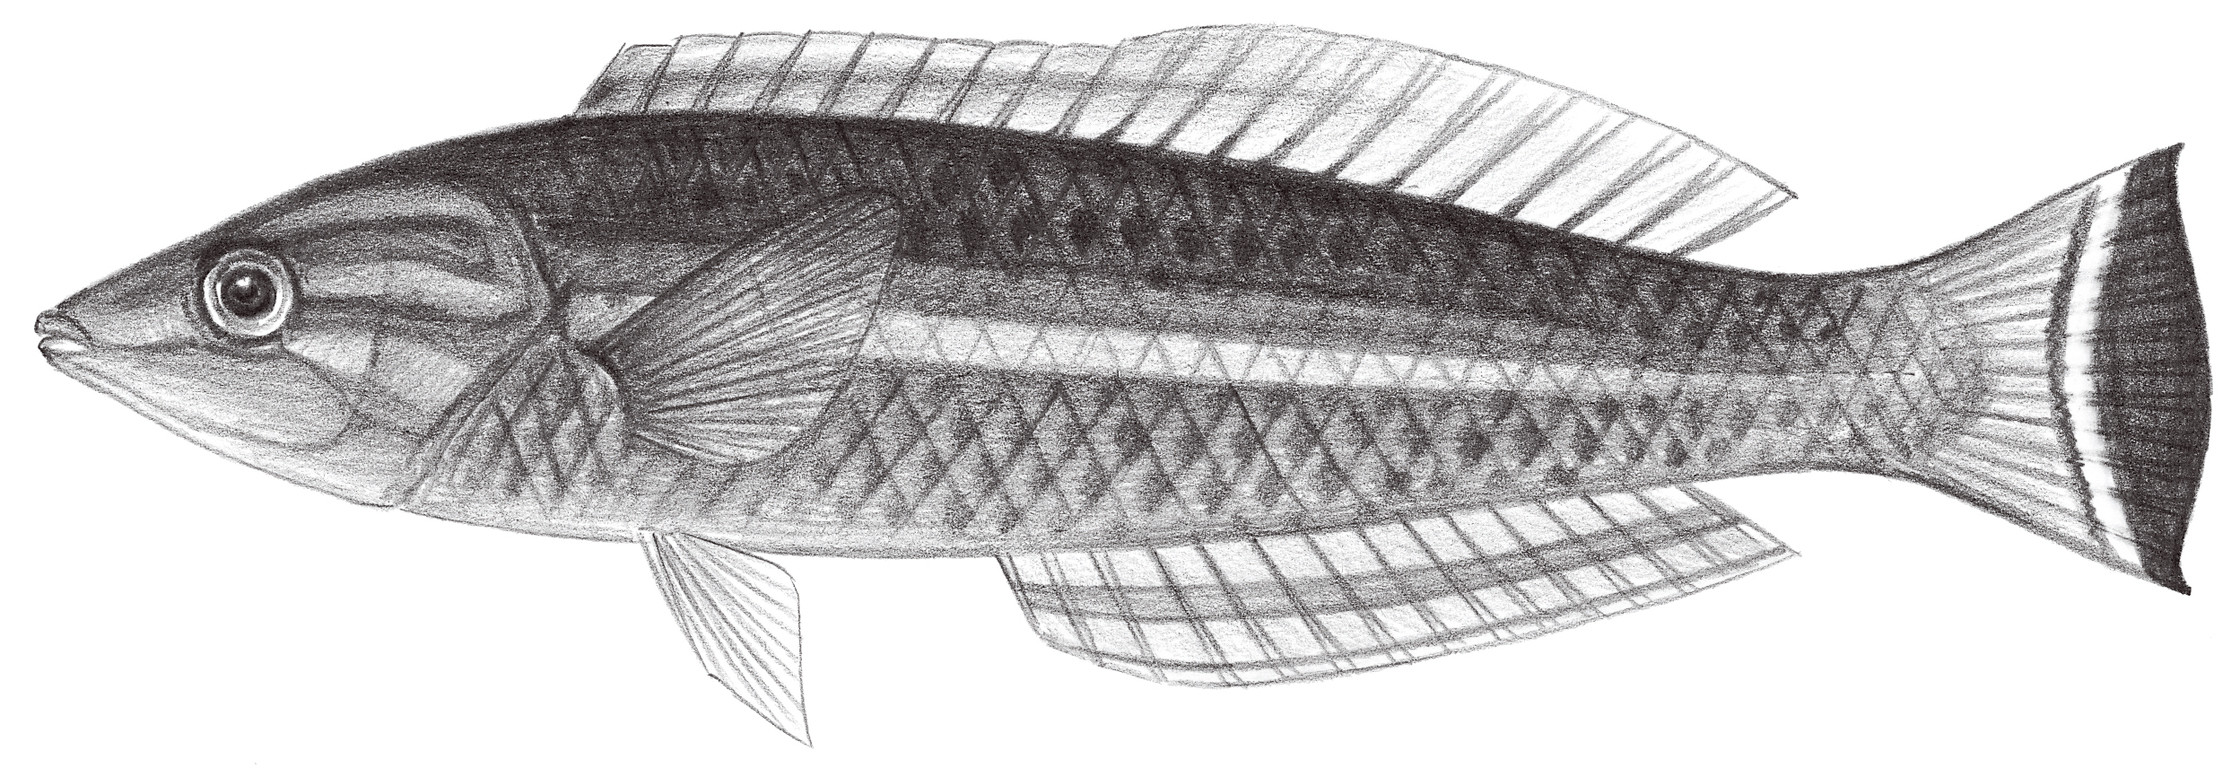 1815.	擬海豬魚 Pseudjuloides cerasinus (Snyder, 1904)